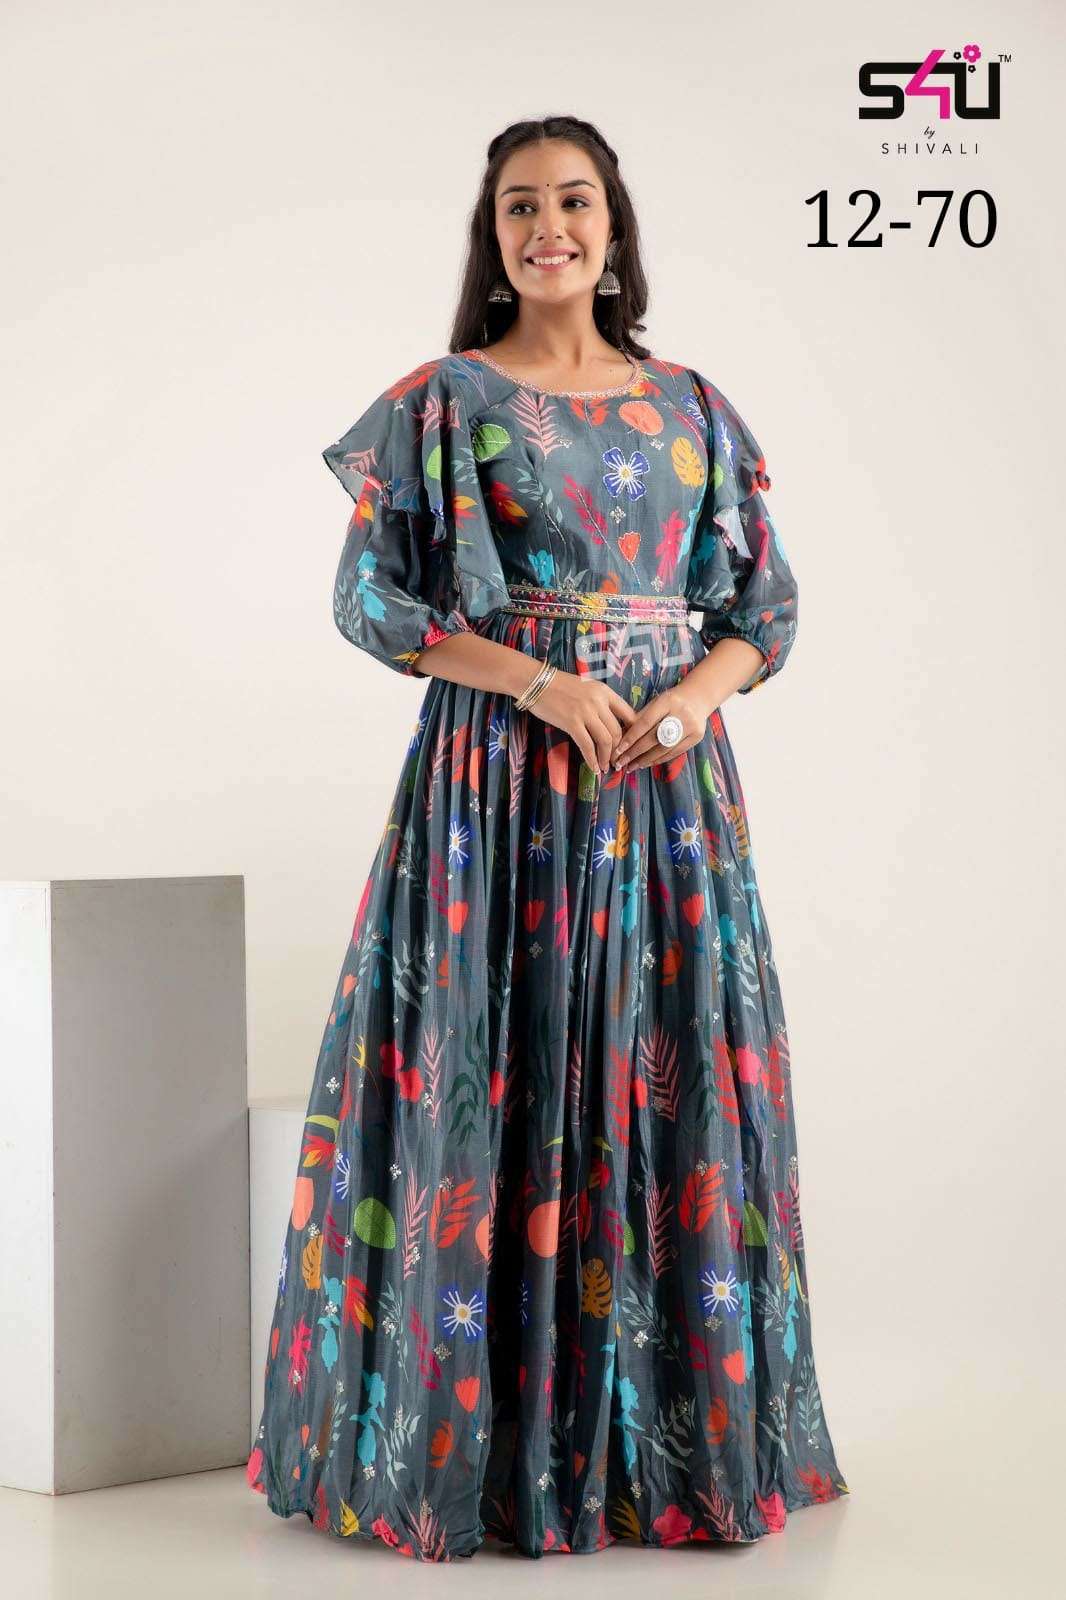 s4u shivali 12-70 design latest fancy wedding wear floor length gown at wholesale price surat gujarat